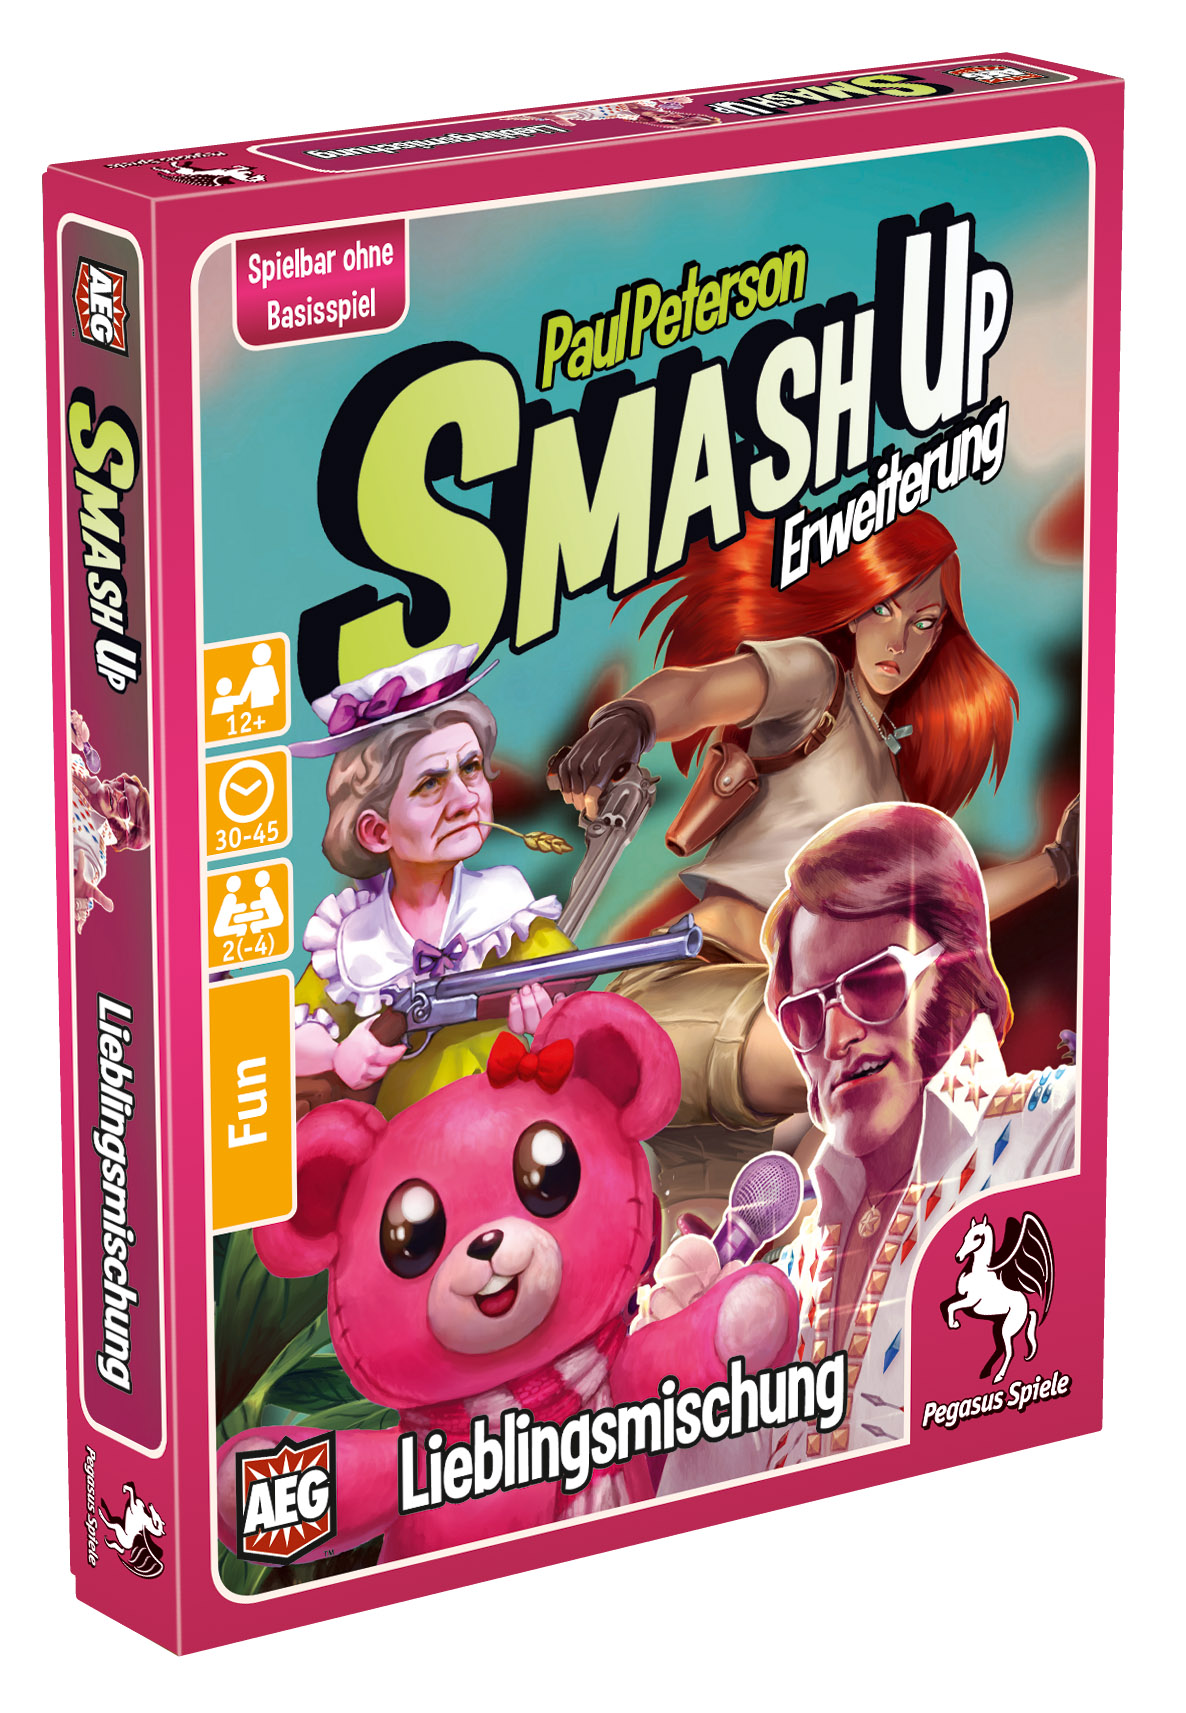 Smash Up: Lieblingsmischung für Mai 2017 angekündigt